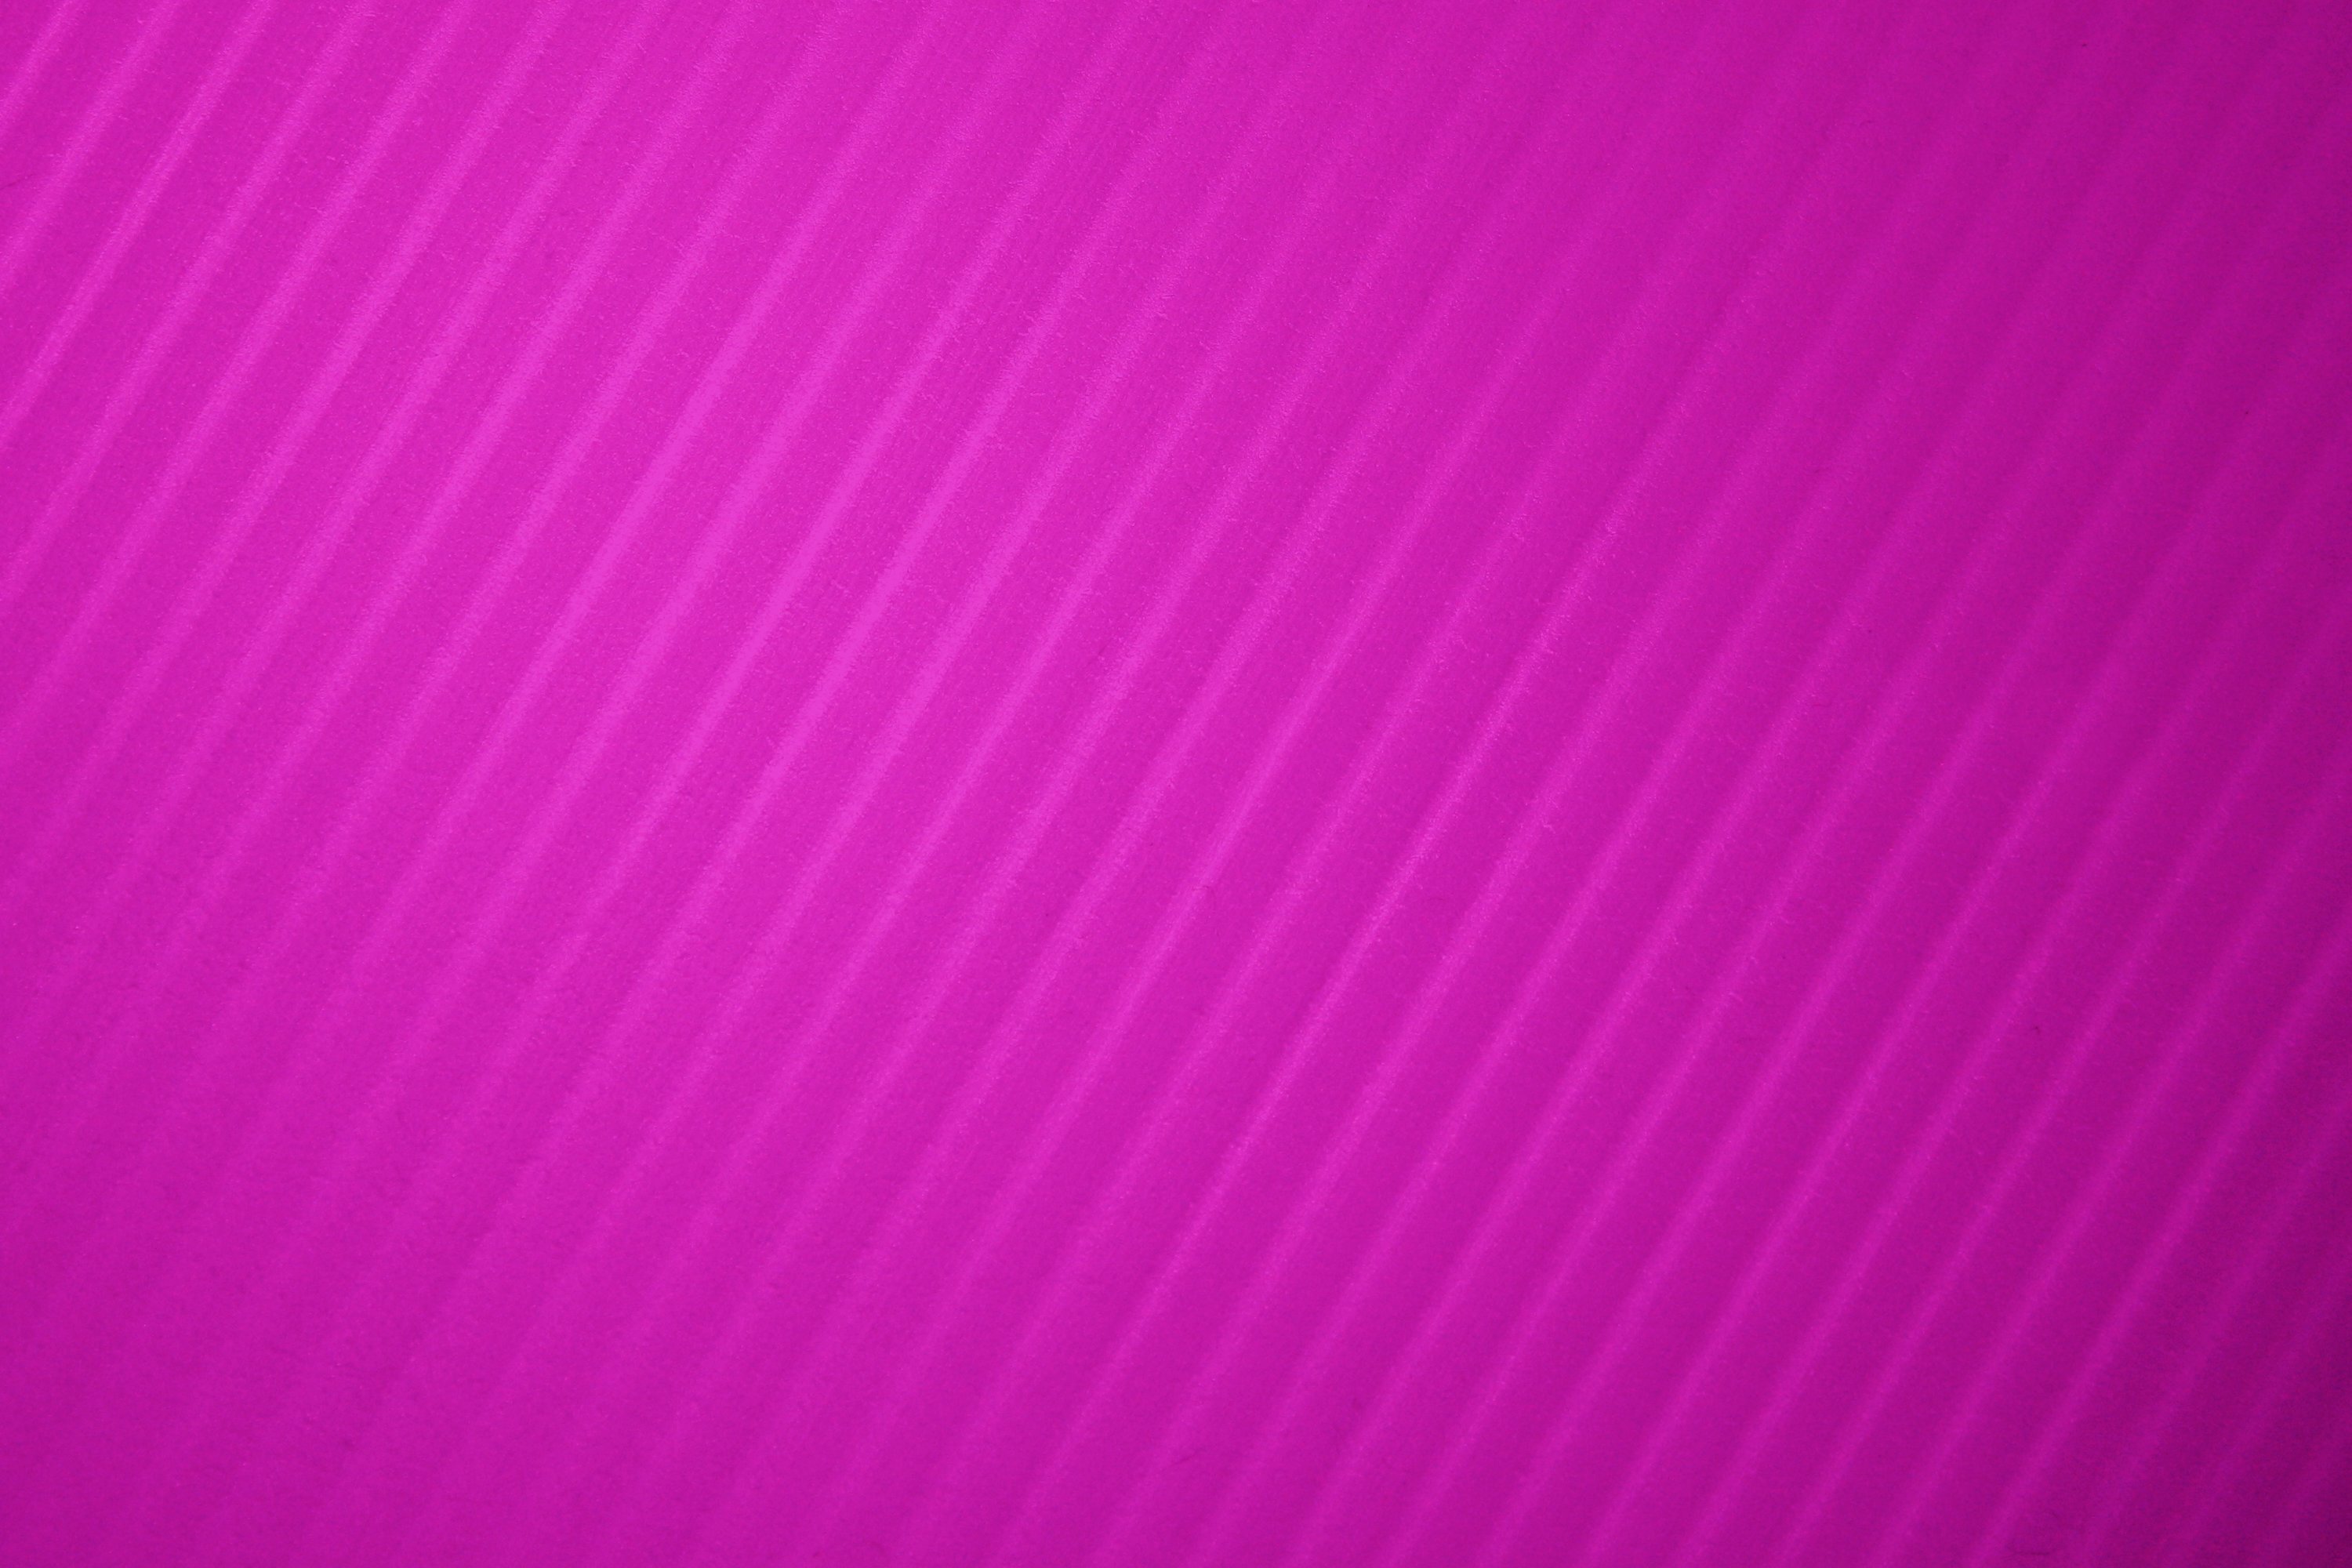 Hot Pink Diagonal Striped Plastic Texture Picture | Free Photograph |  Photos Public Domain